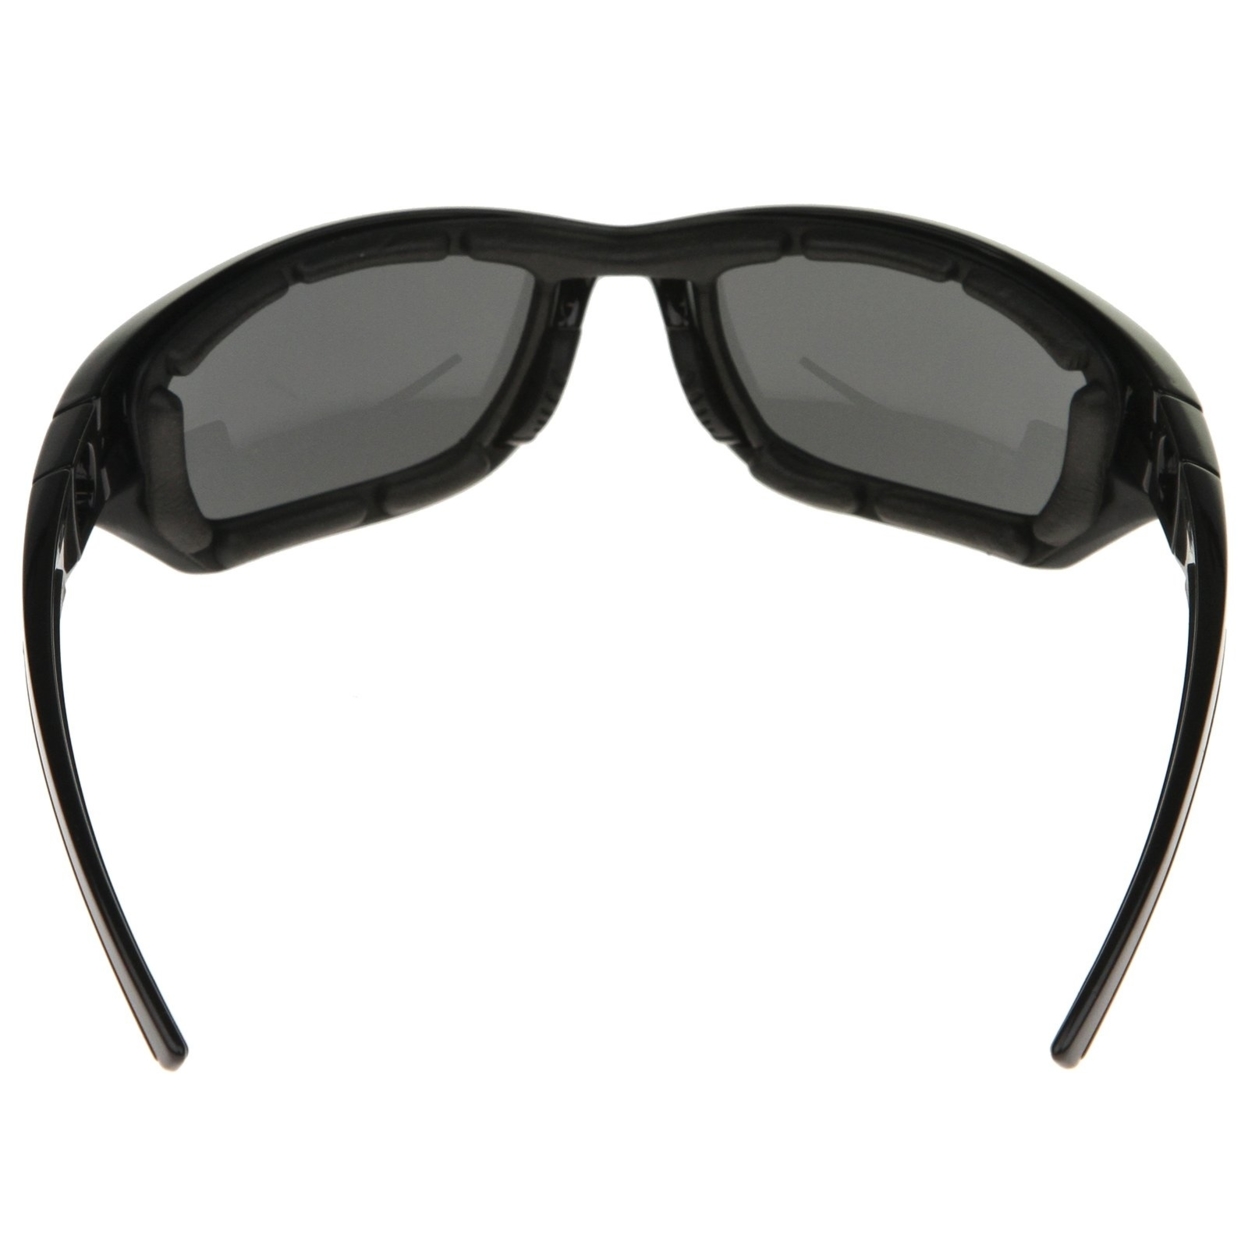 Vinson - Extreme Sports Removable Padding TR-90 Goggles 70mm - Black-Grey / Smoke